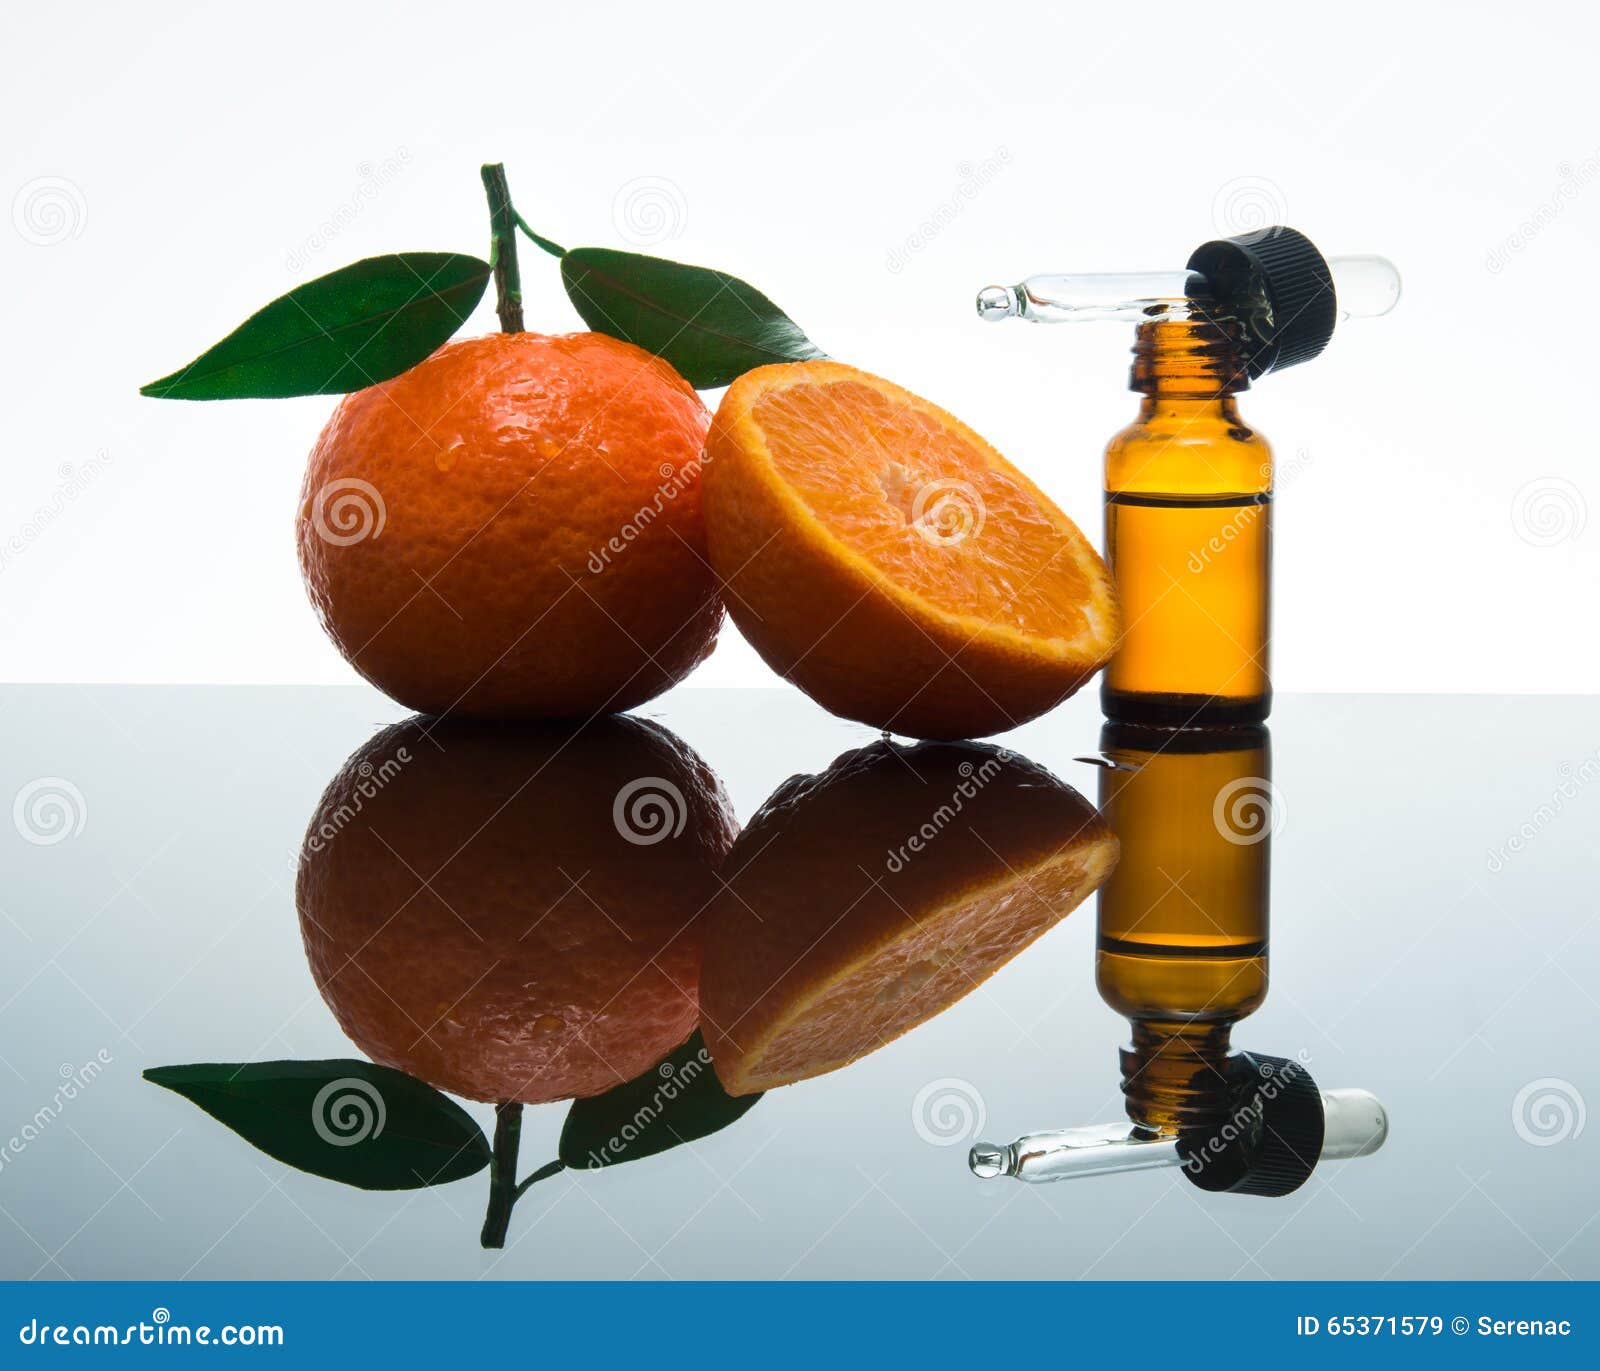 tangerine / mandarin essential oil bottle with dropper